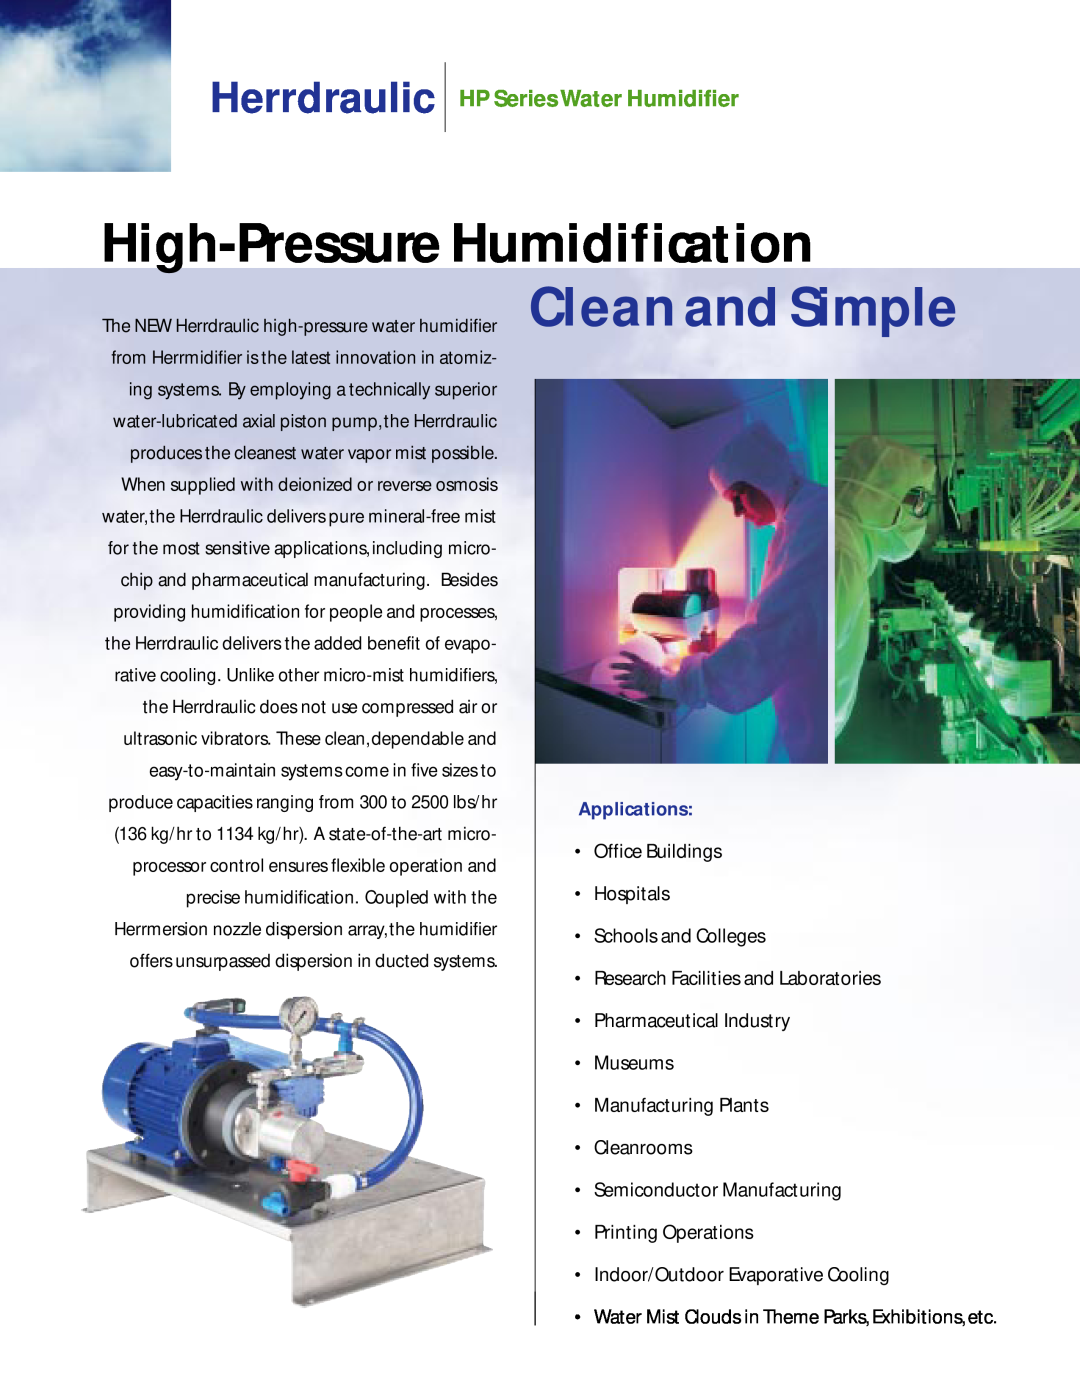 Herrmidifier Co Herrdraulic manual HP Series Water Humidifier, High-PressureHumidification, Clean and Simple 